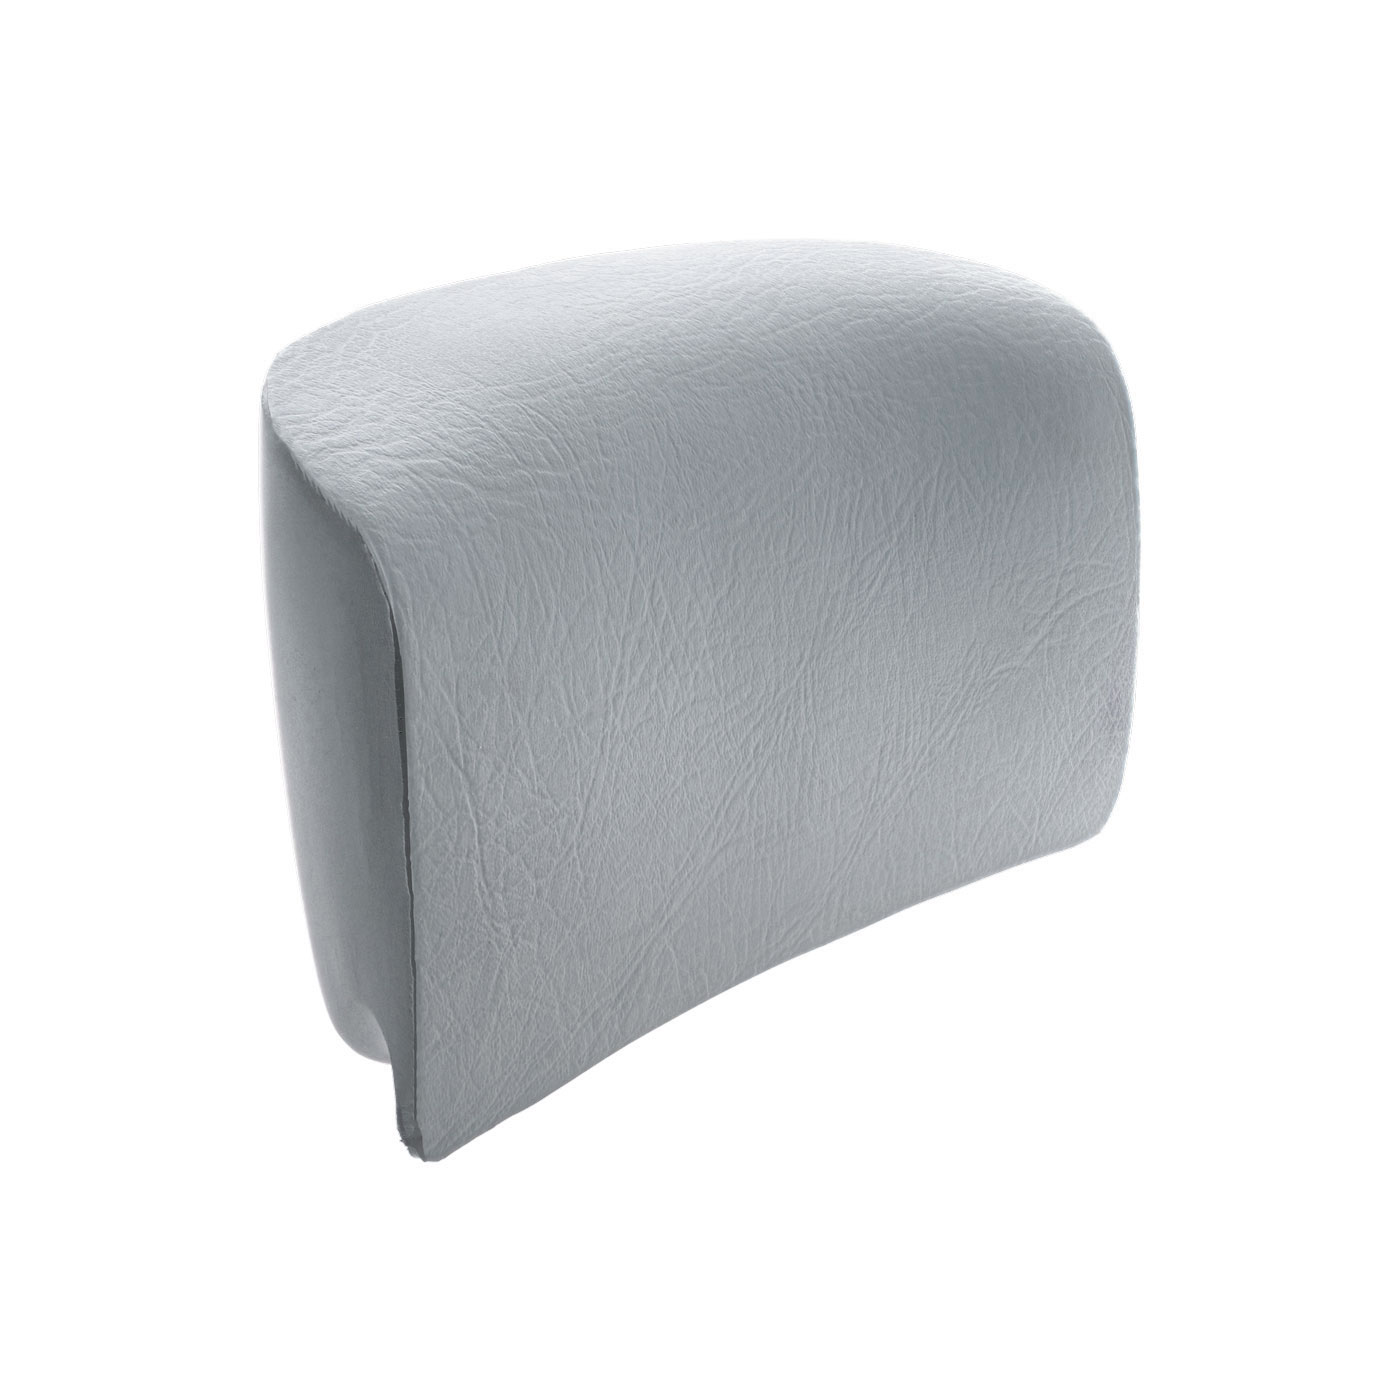 Dimension One® Spa tile Pillow